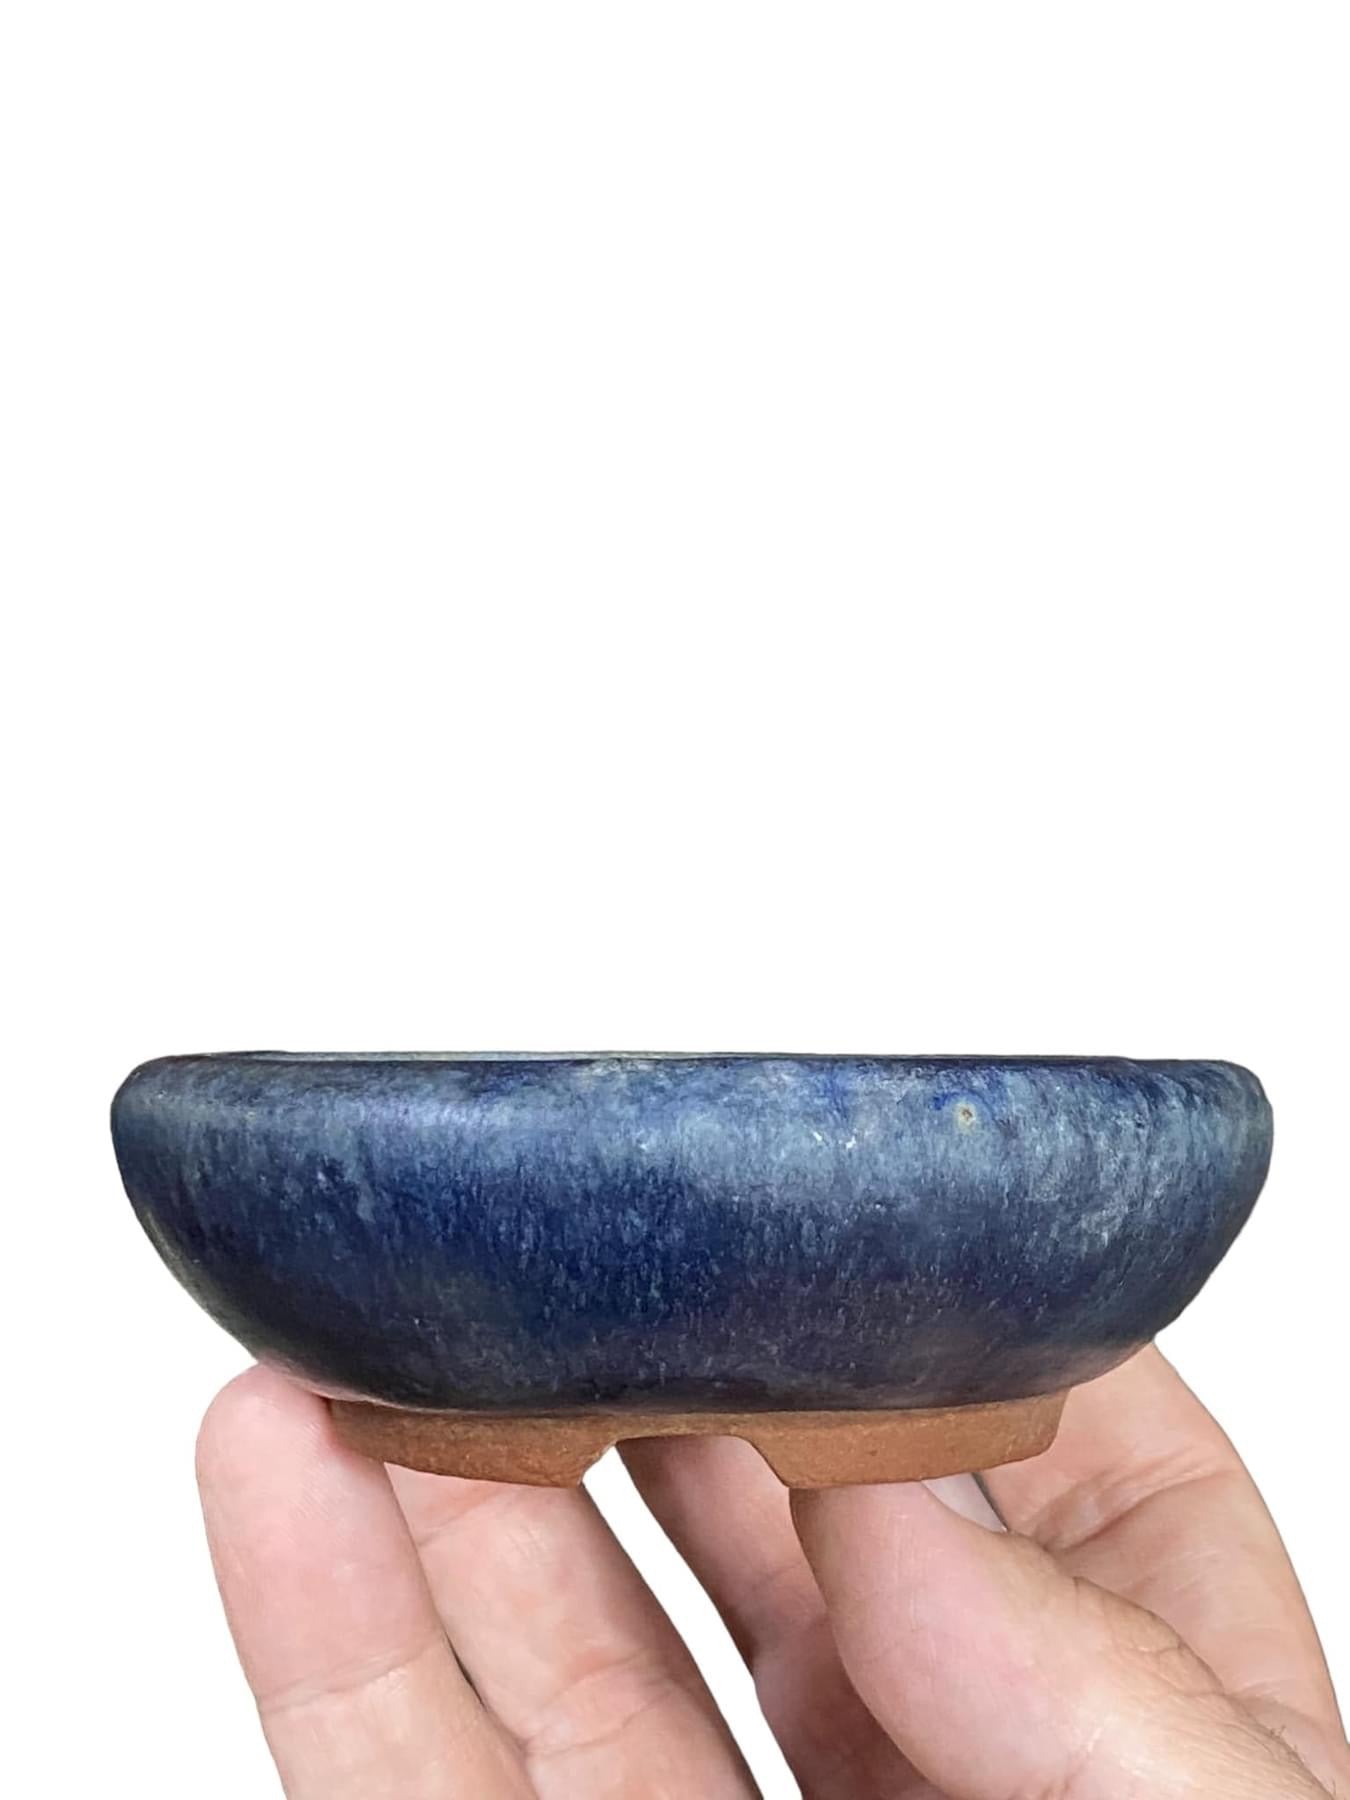 Yozan - Old Blue Namako Glazed Bonsai Pot with Patina (4-11/16” wide)